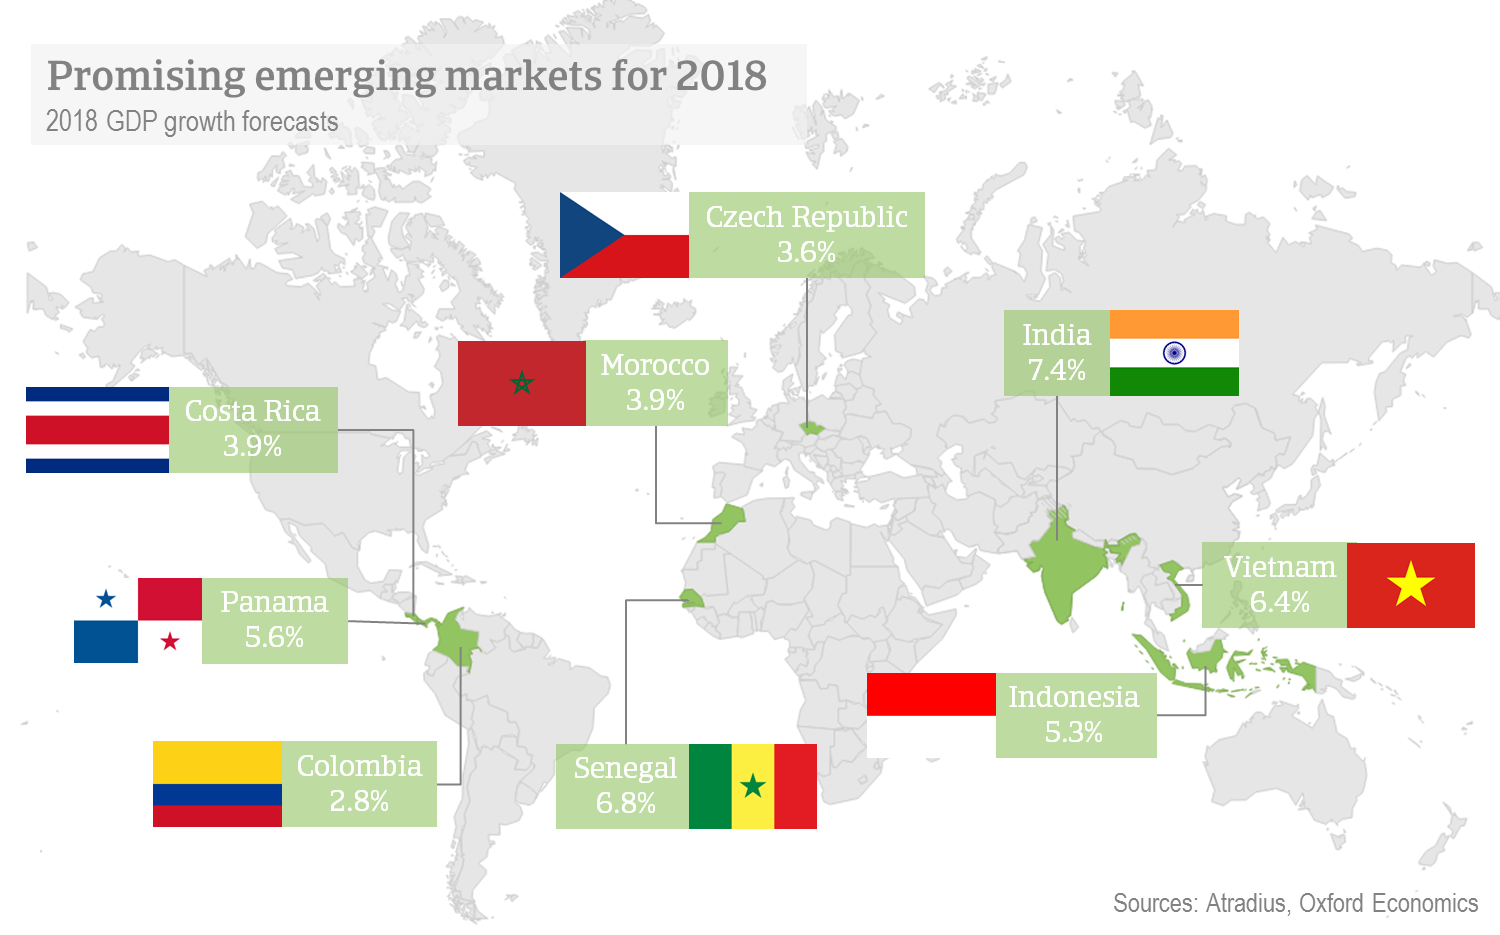 Promising emerging markets for 2018